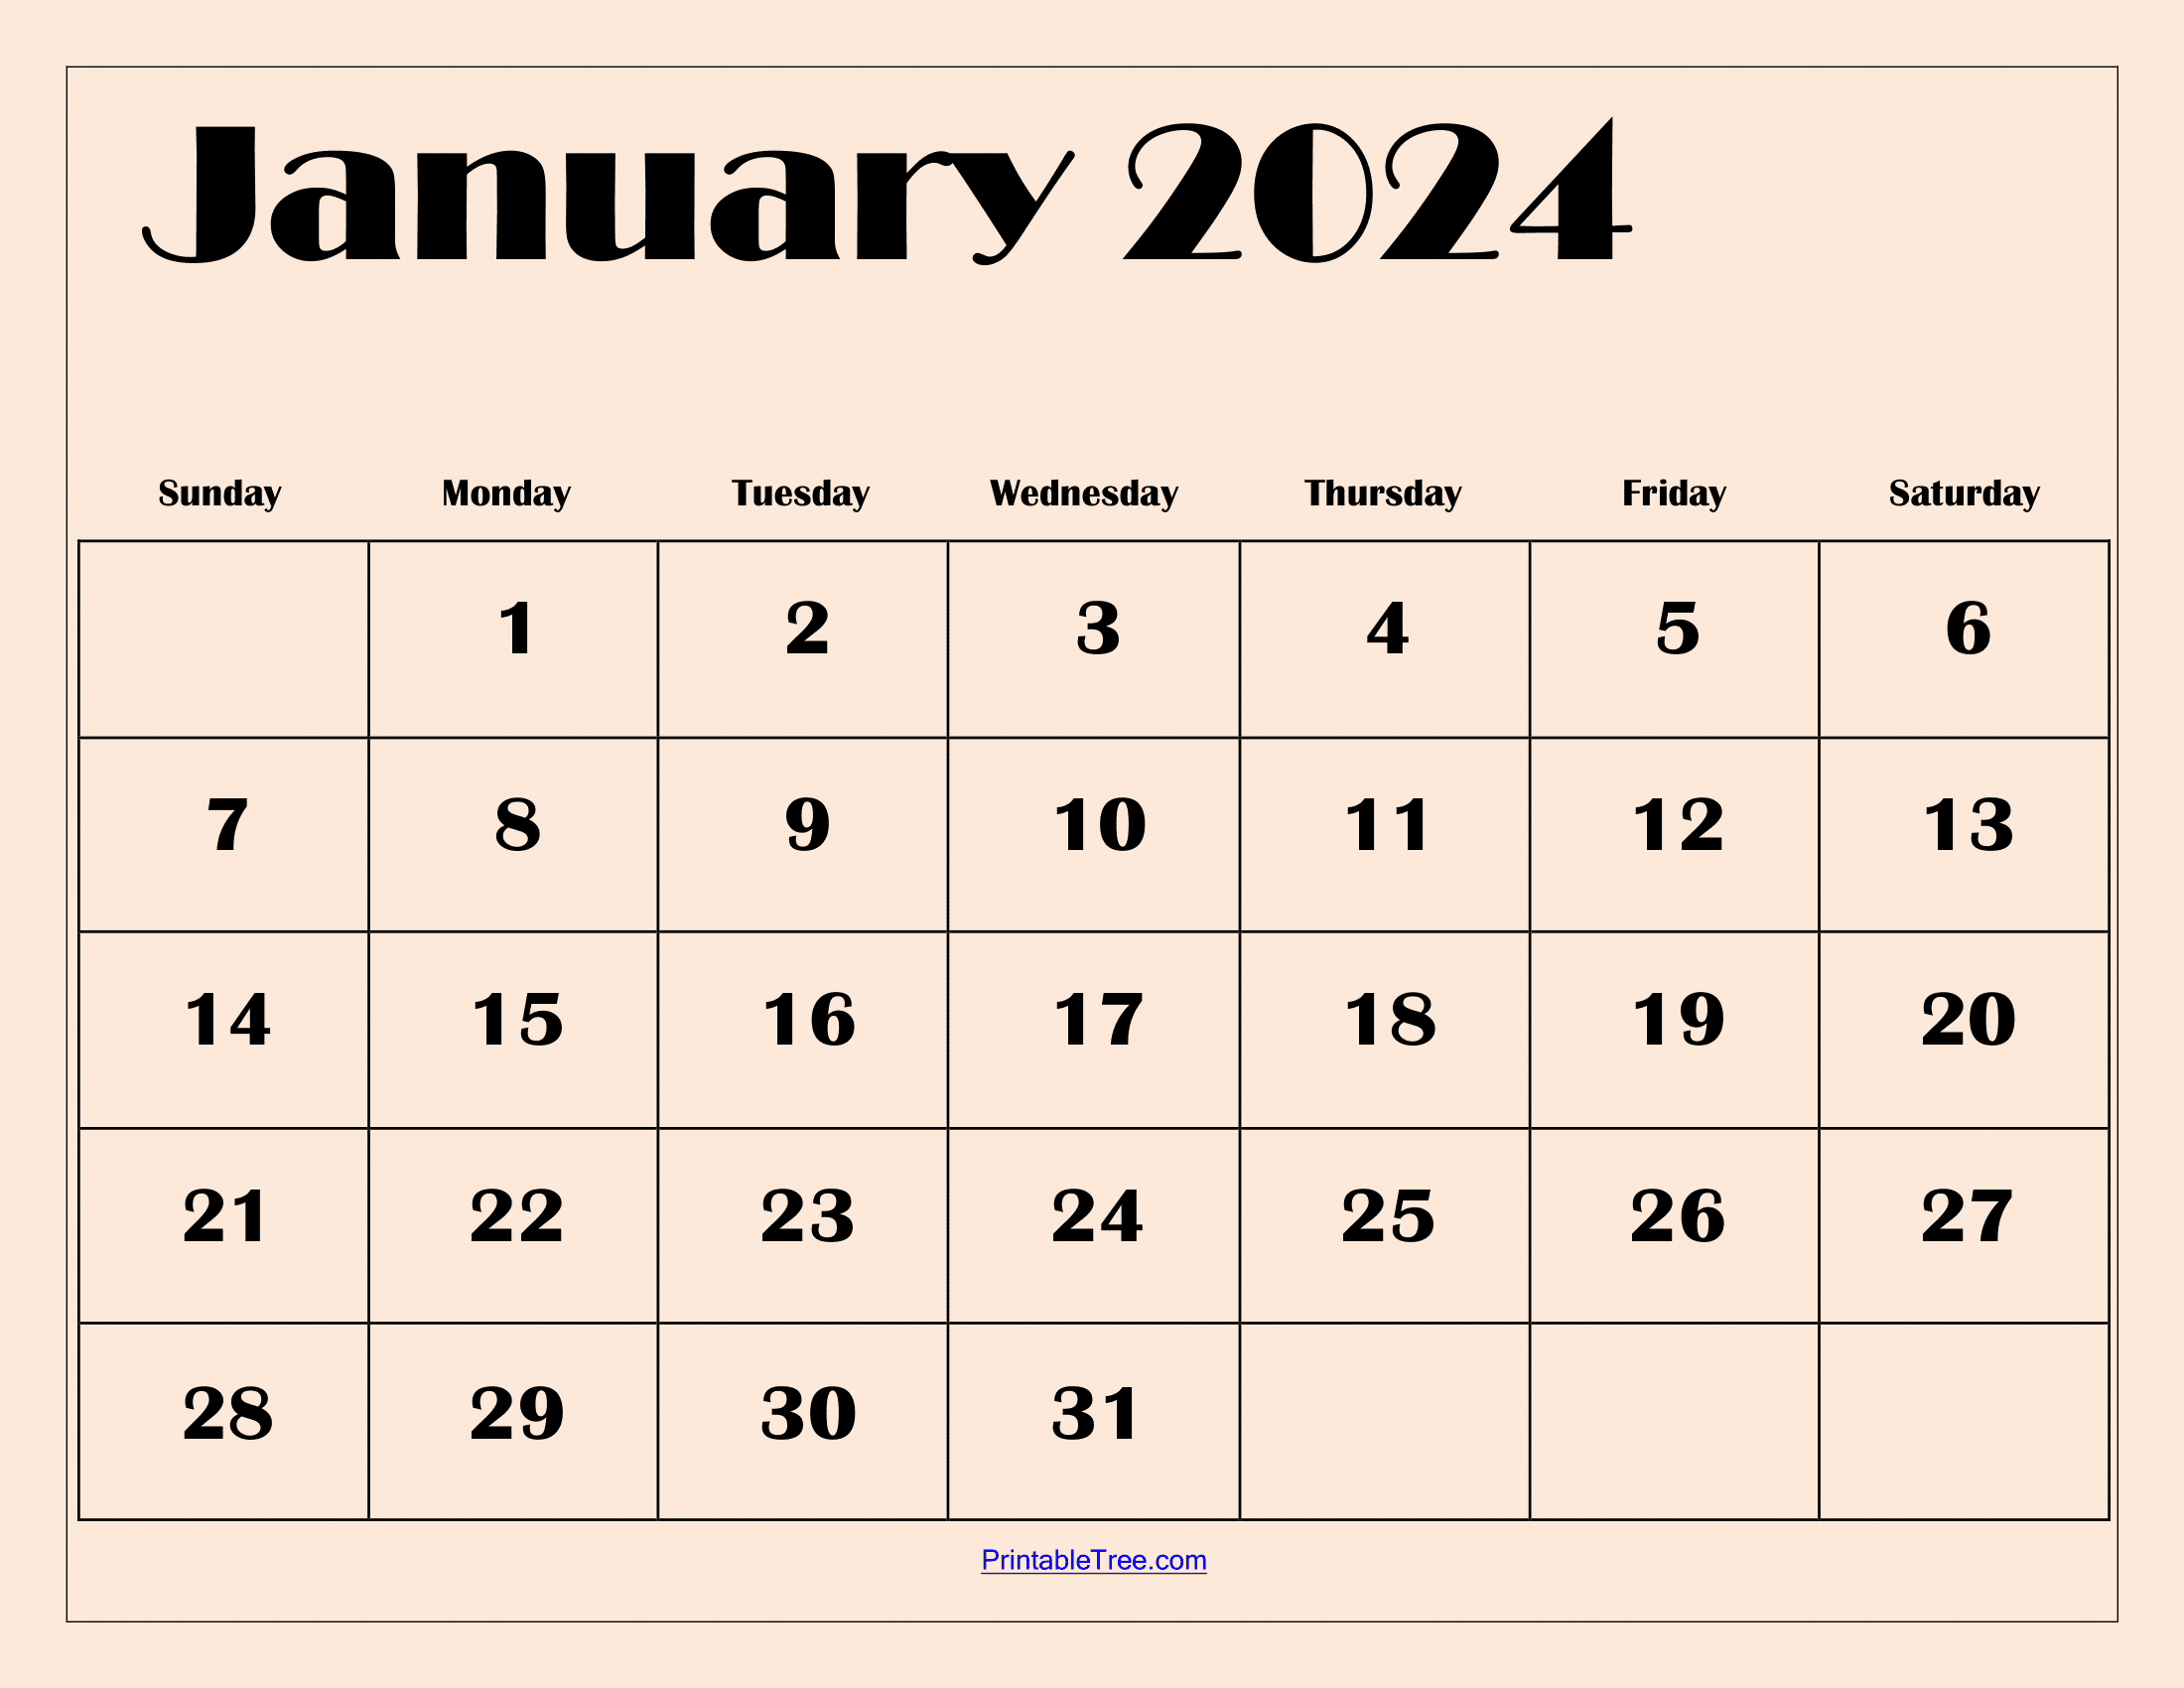 January 2024 Calendar Printable Pdf Template With Holidays | Printable Calendar 2024 January Month